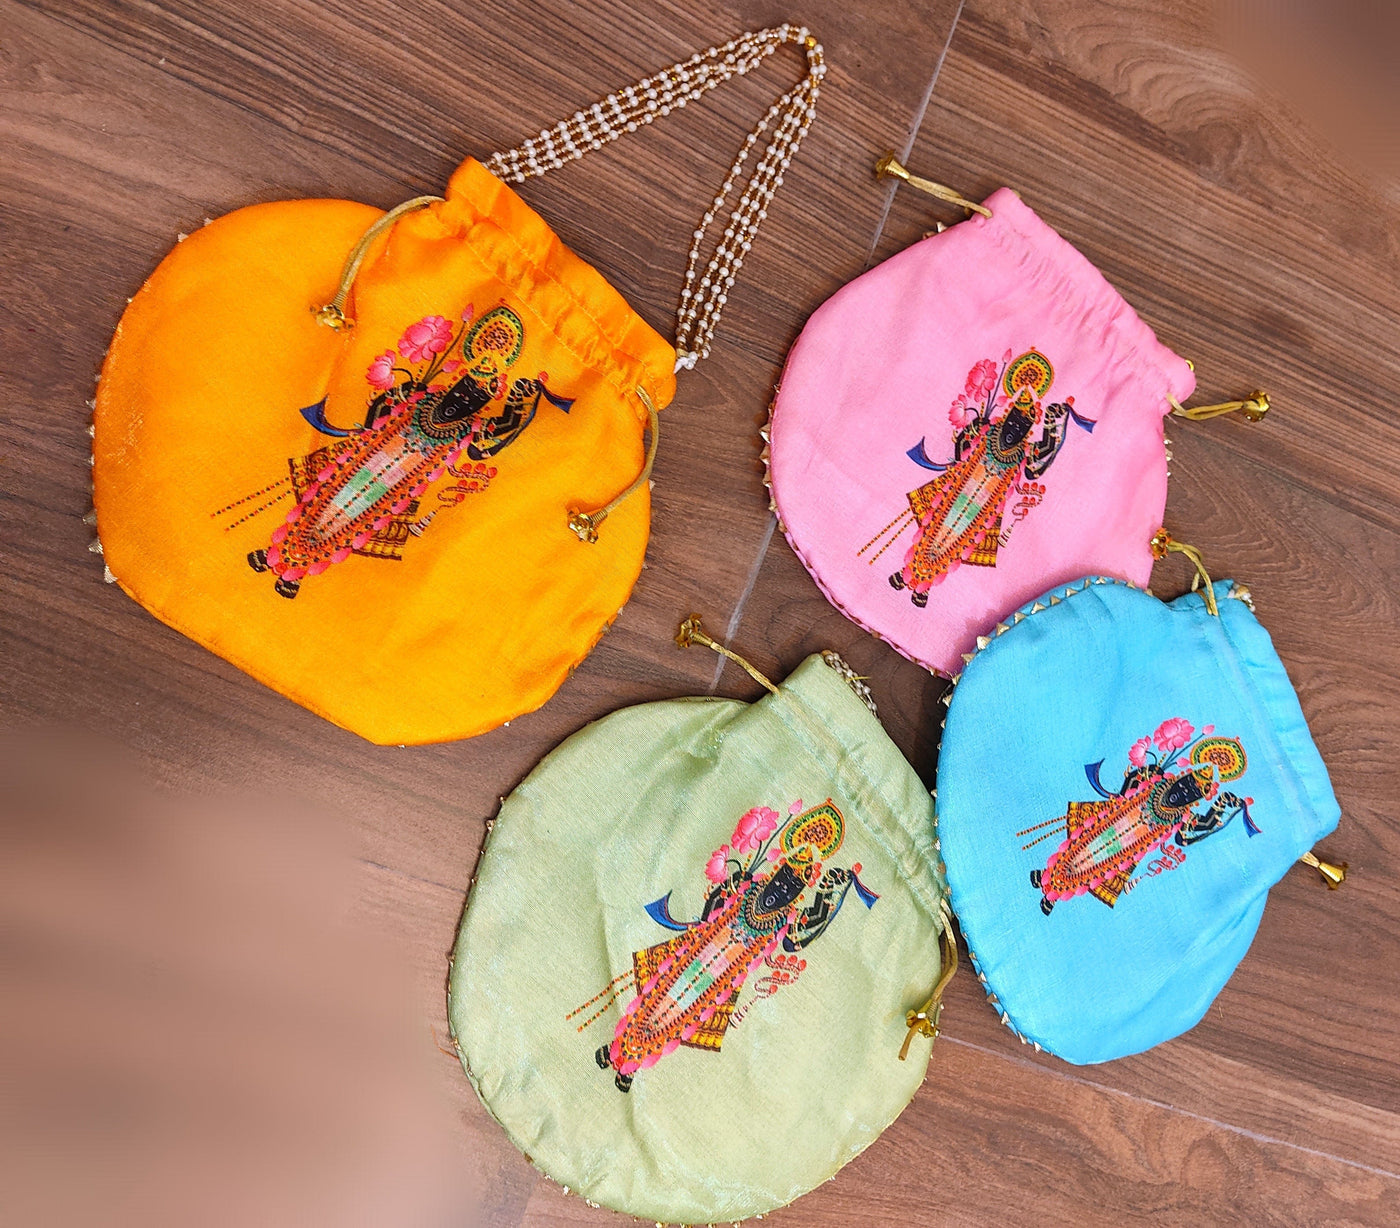 100 Rs each on buying 🏷in bulk | Call 📞 at 8619550223 Women's Potli Bag LAMANSH® Shreenath ji 🙏 potli bags for festival puja giveaways | Shrinath ji Print potli bags for return gifting in Wedding & Religious functions